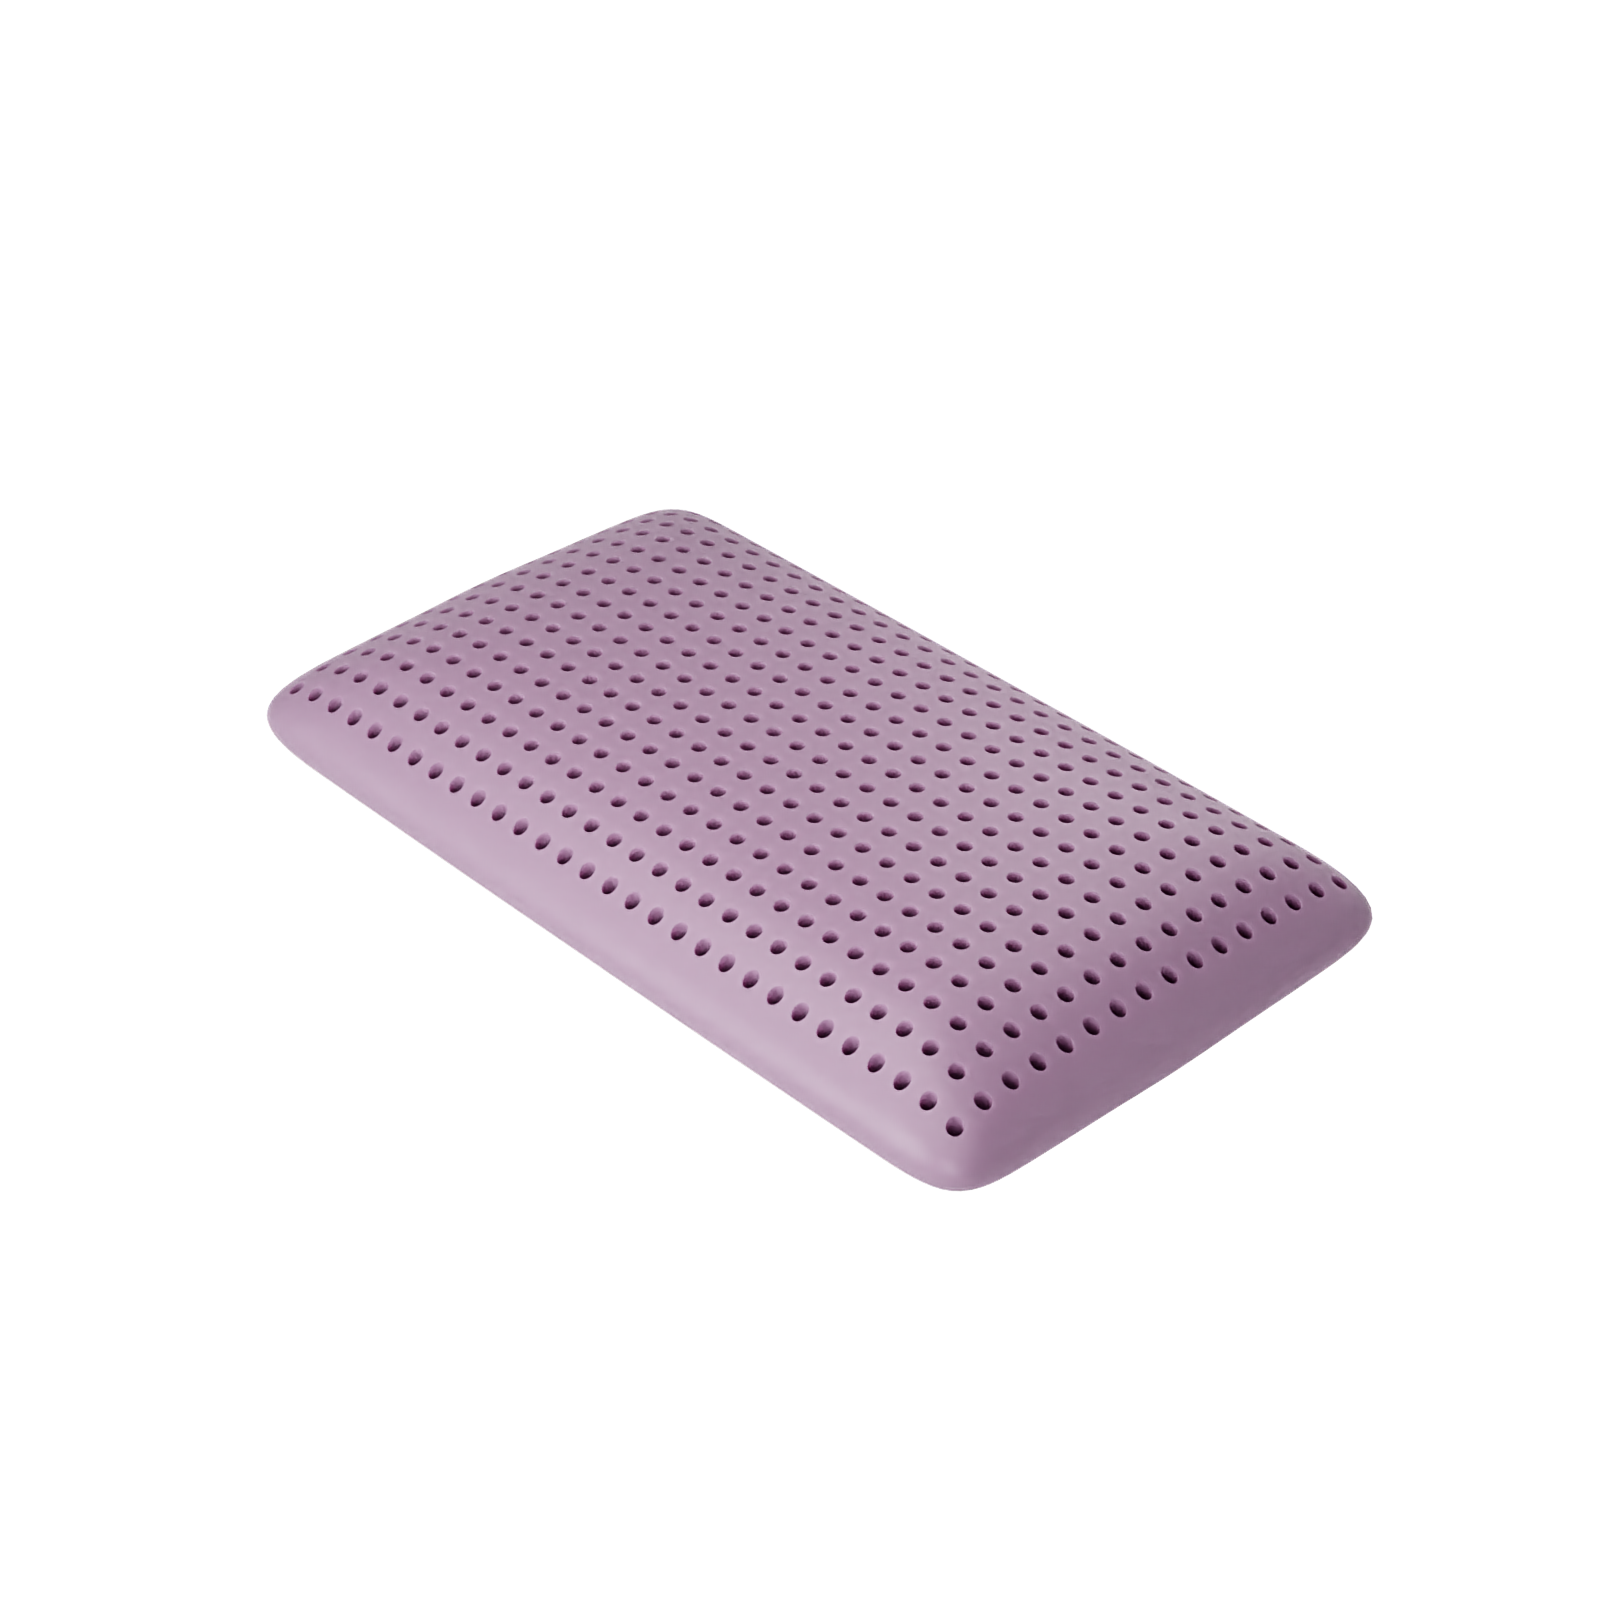 SOOTHE Medium Profile Lavender Infused Memory Foam Pillow